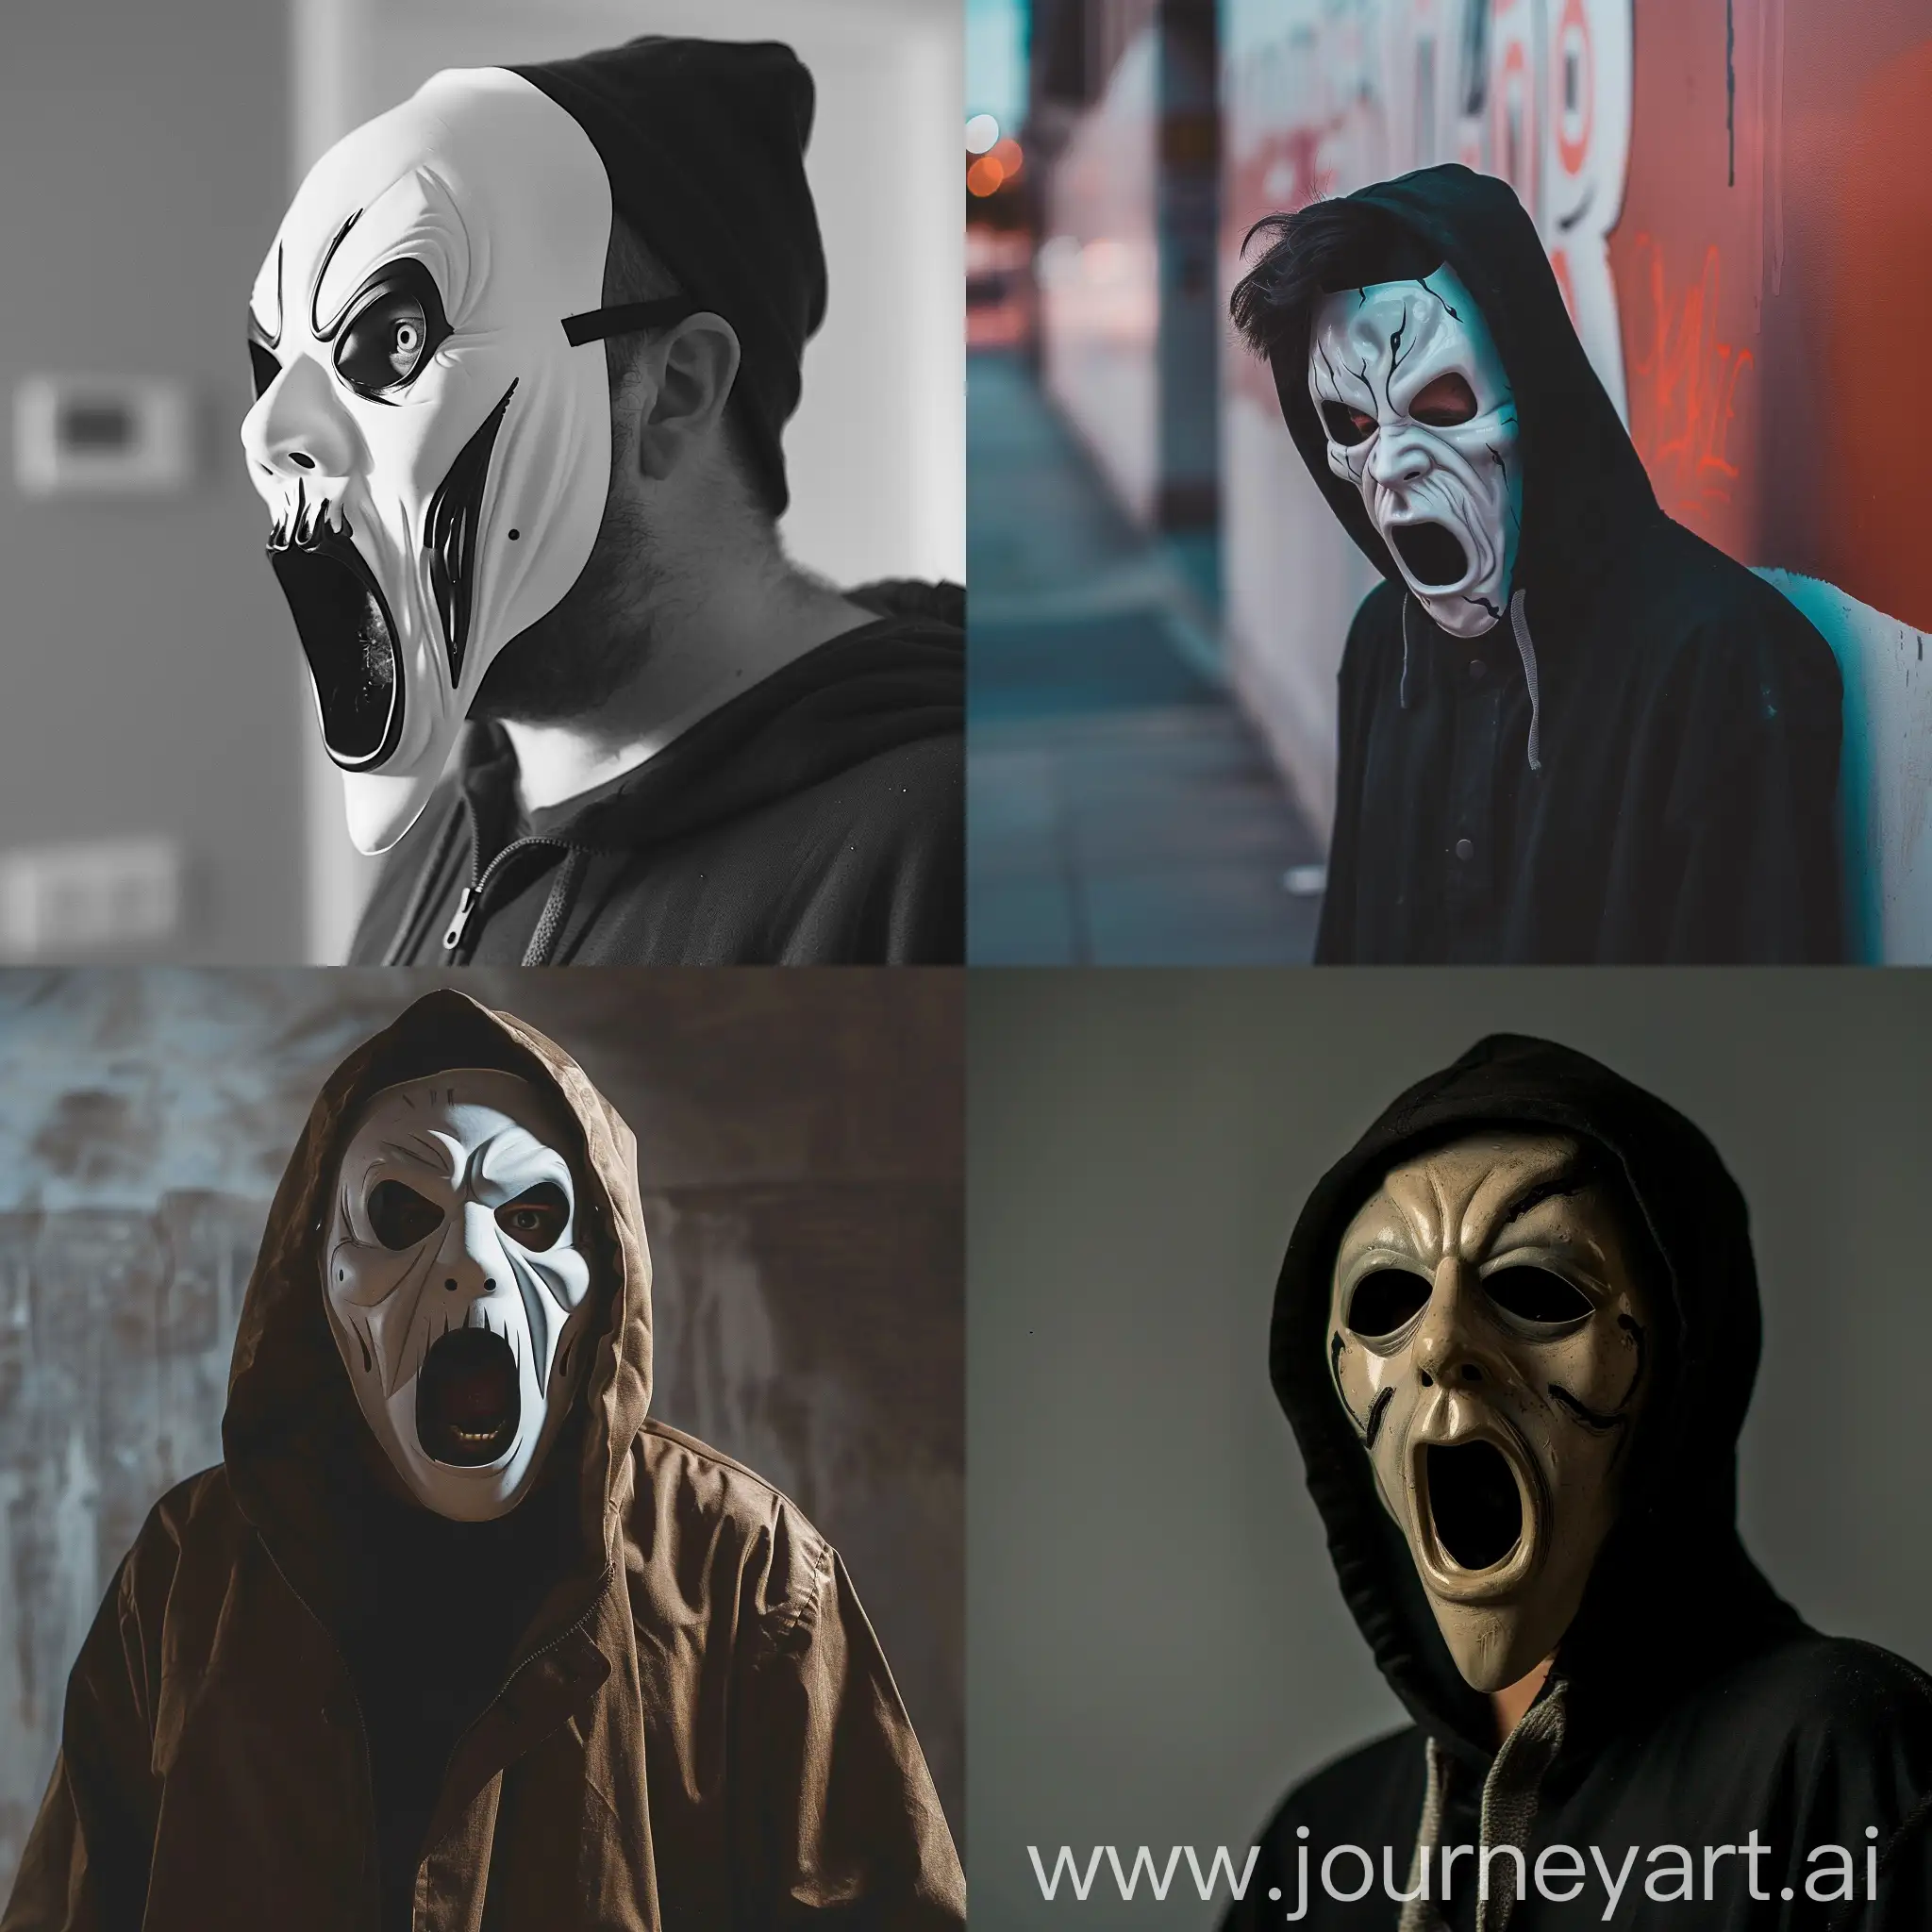 Man with scream mask